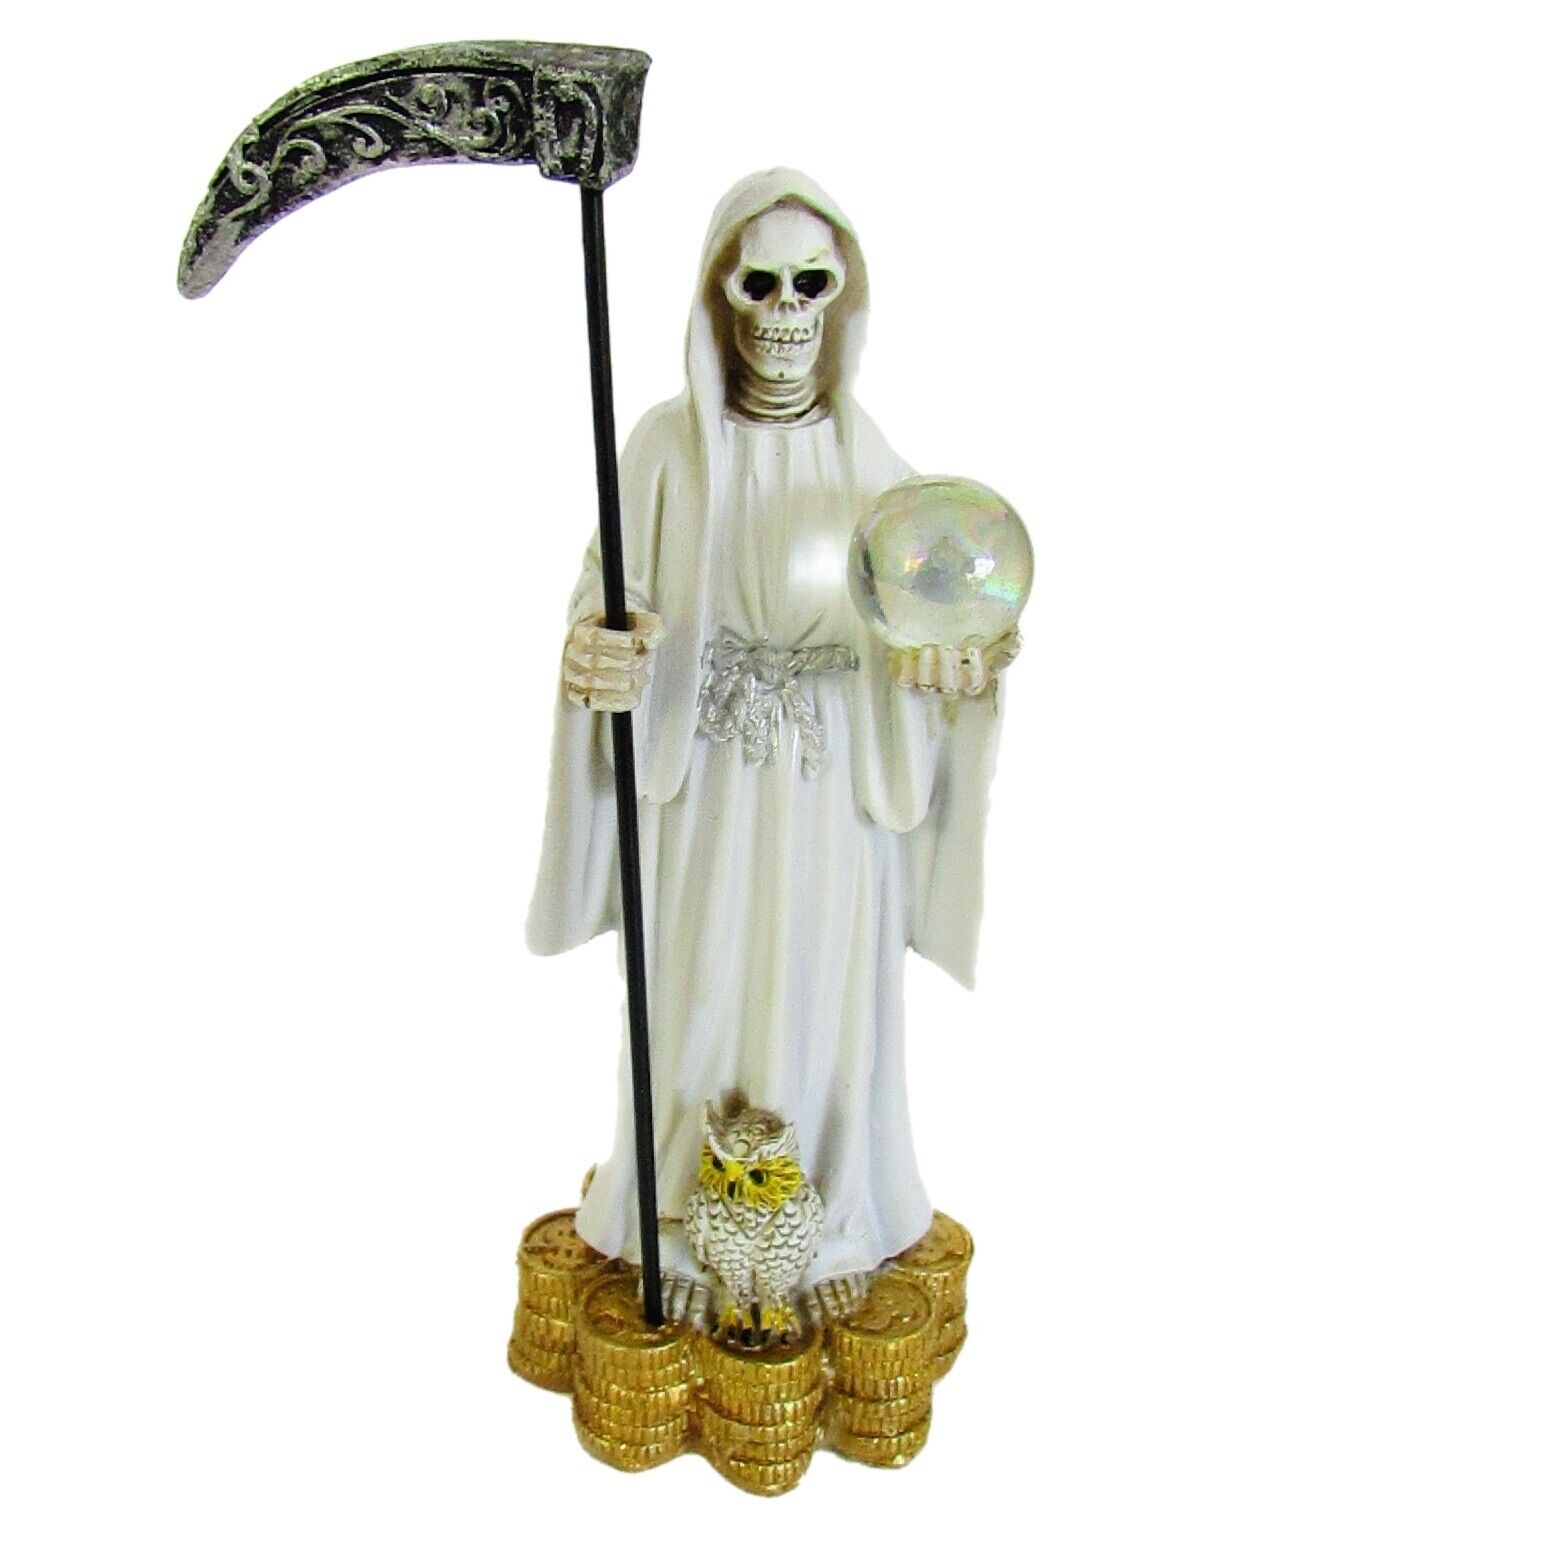 Santa Muerte Blance Estatua Chico / White Holly Death Miniature Statue 5.5\